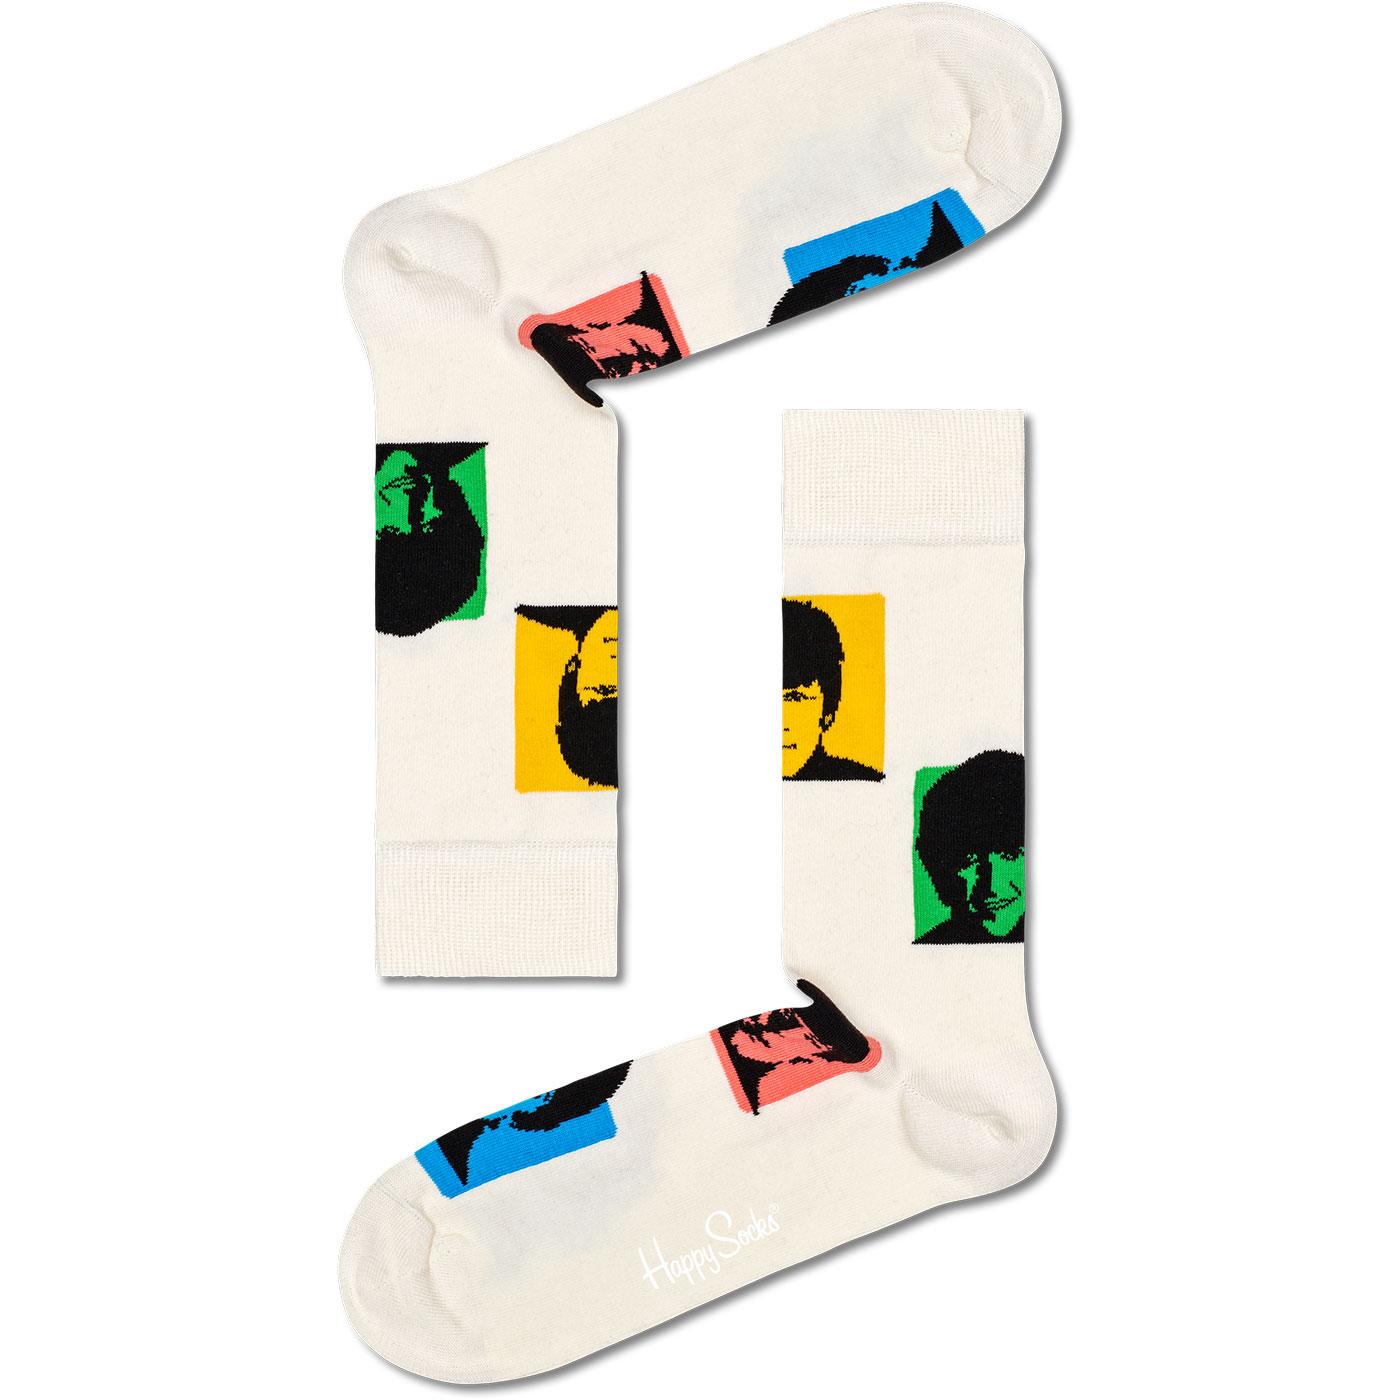 + HAPPY SOCKS x BEATLES Pop Art Silhouettes Socks